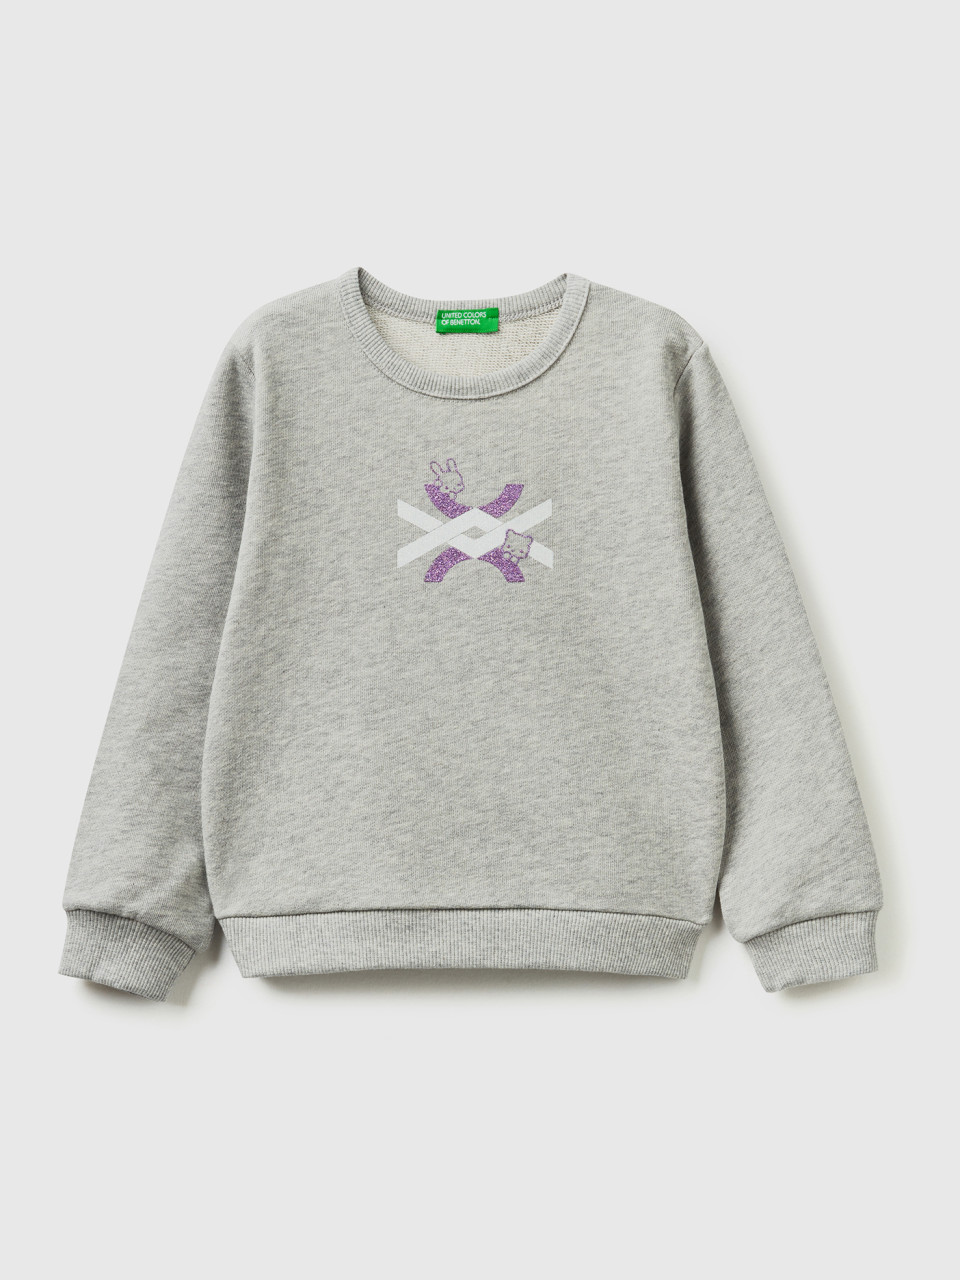 Benetton, Slub Gray Sweatshirt In Organic Cotton With Glittery Print, Light Gray, Kids